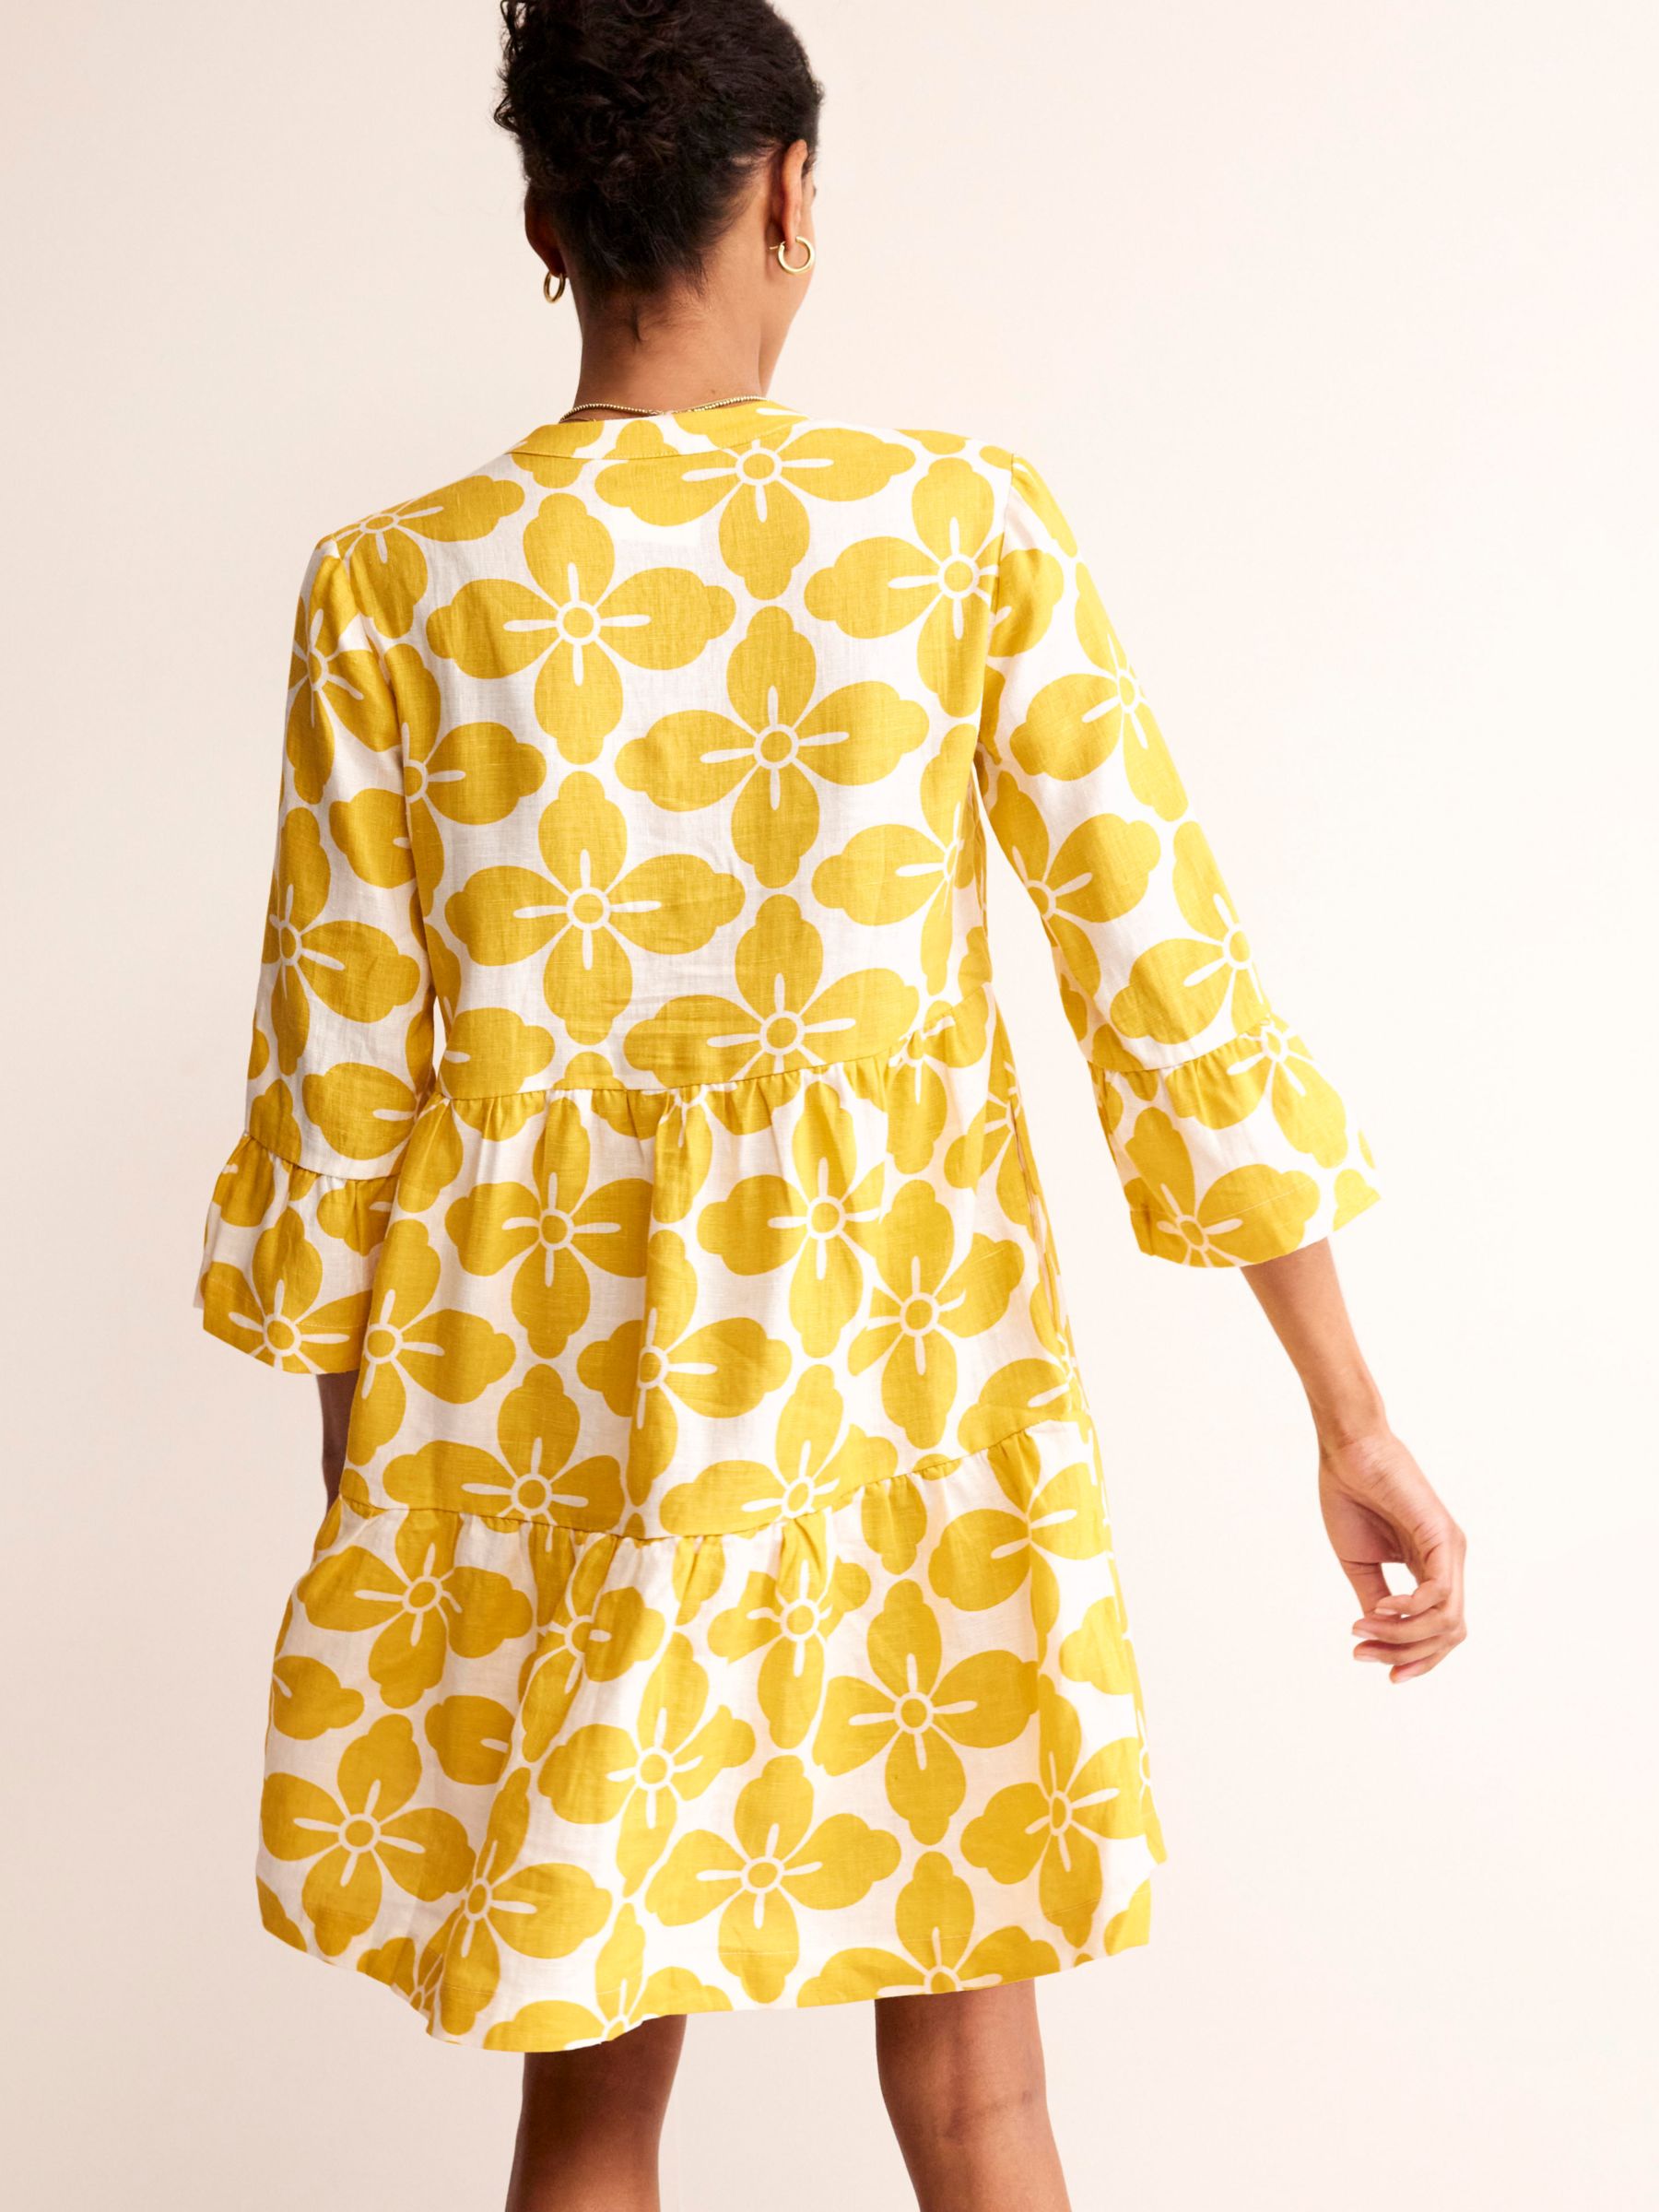 Boden Sophia Floral Tile Linen Shirt Dress, Yellow, 16